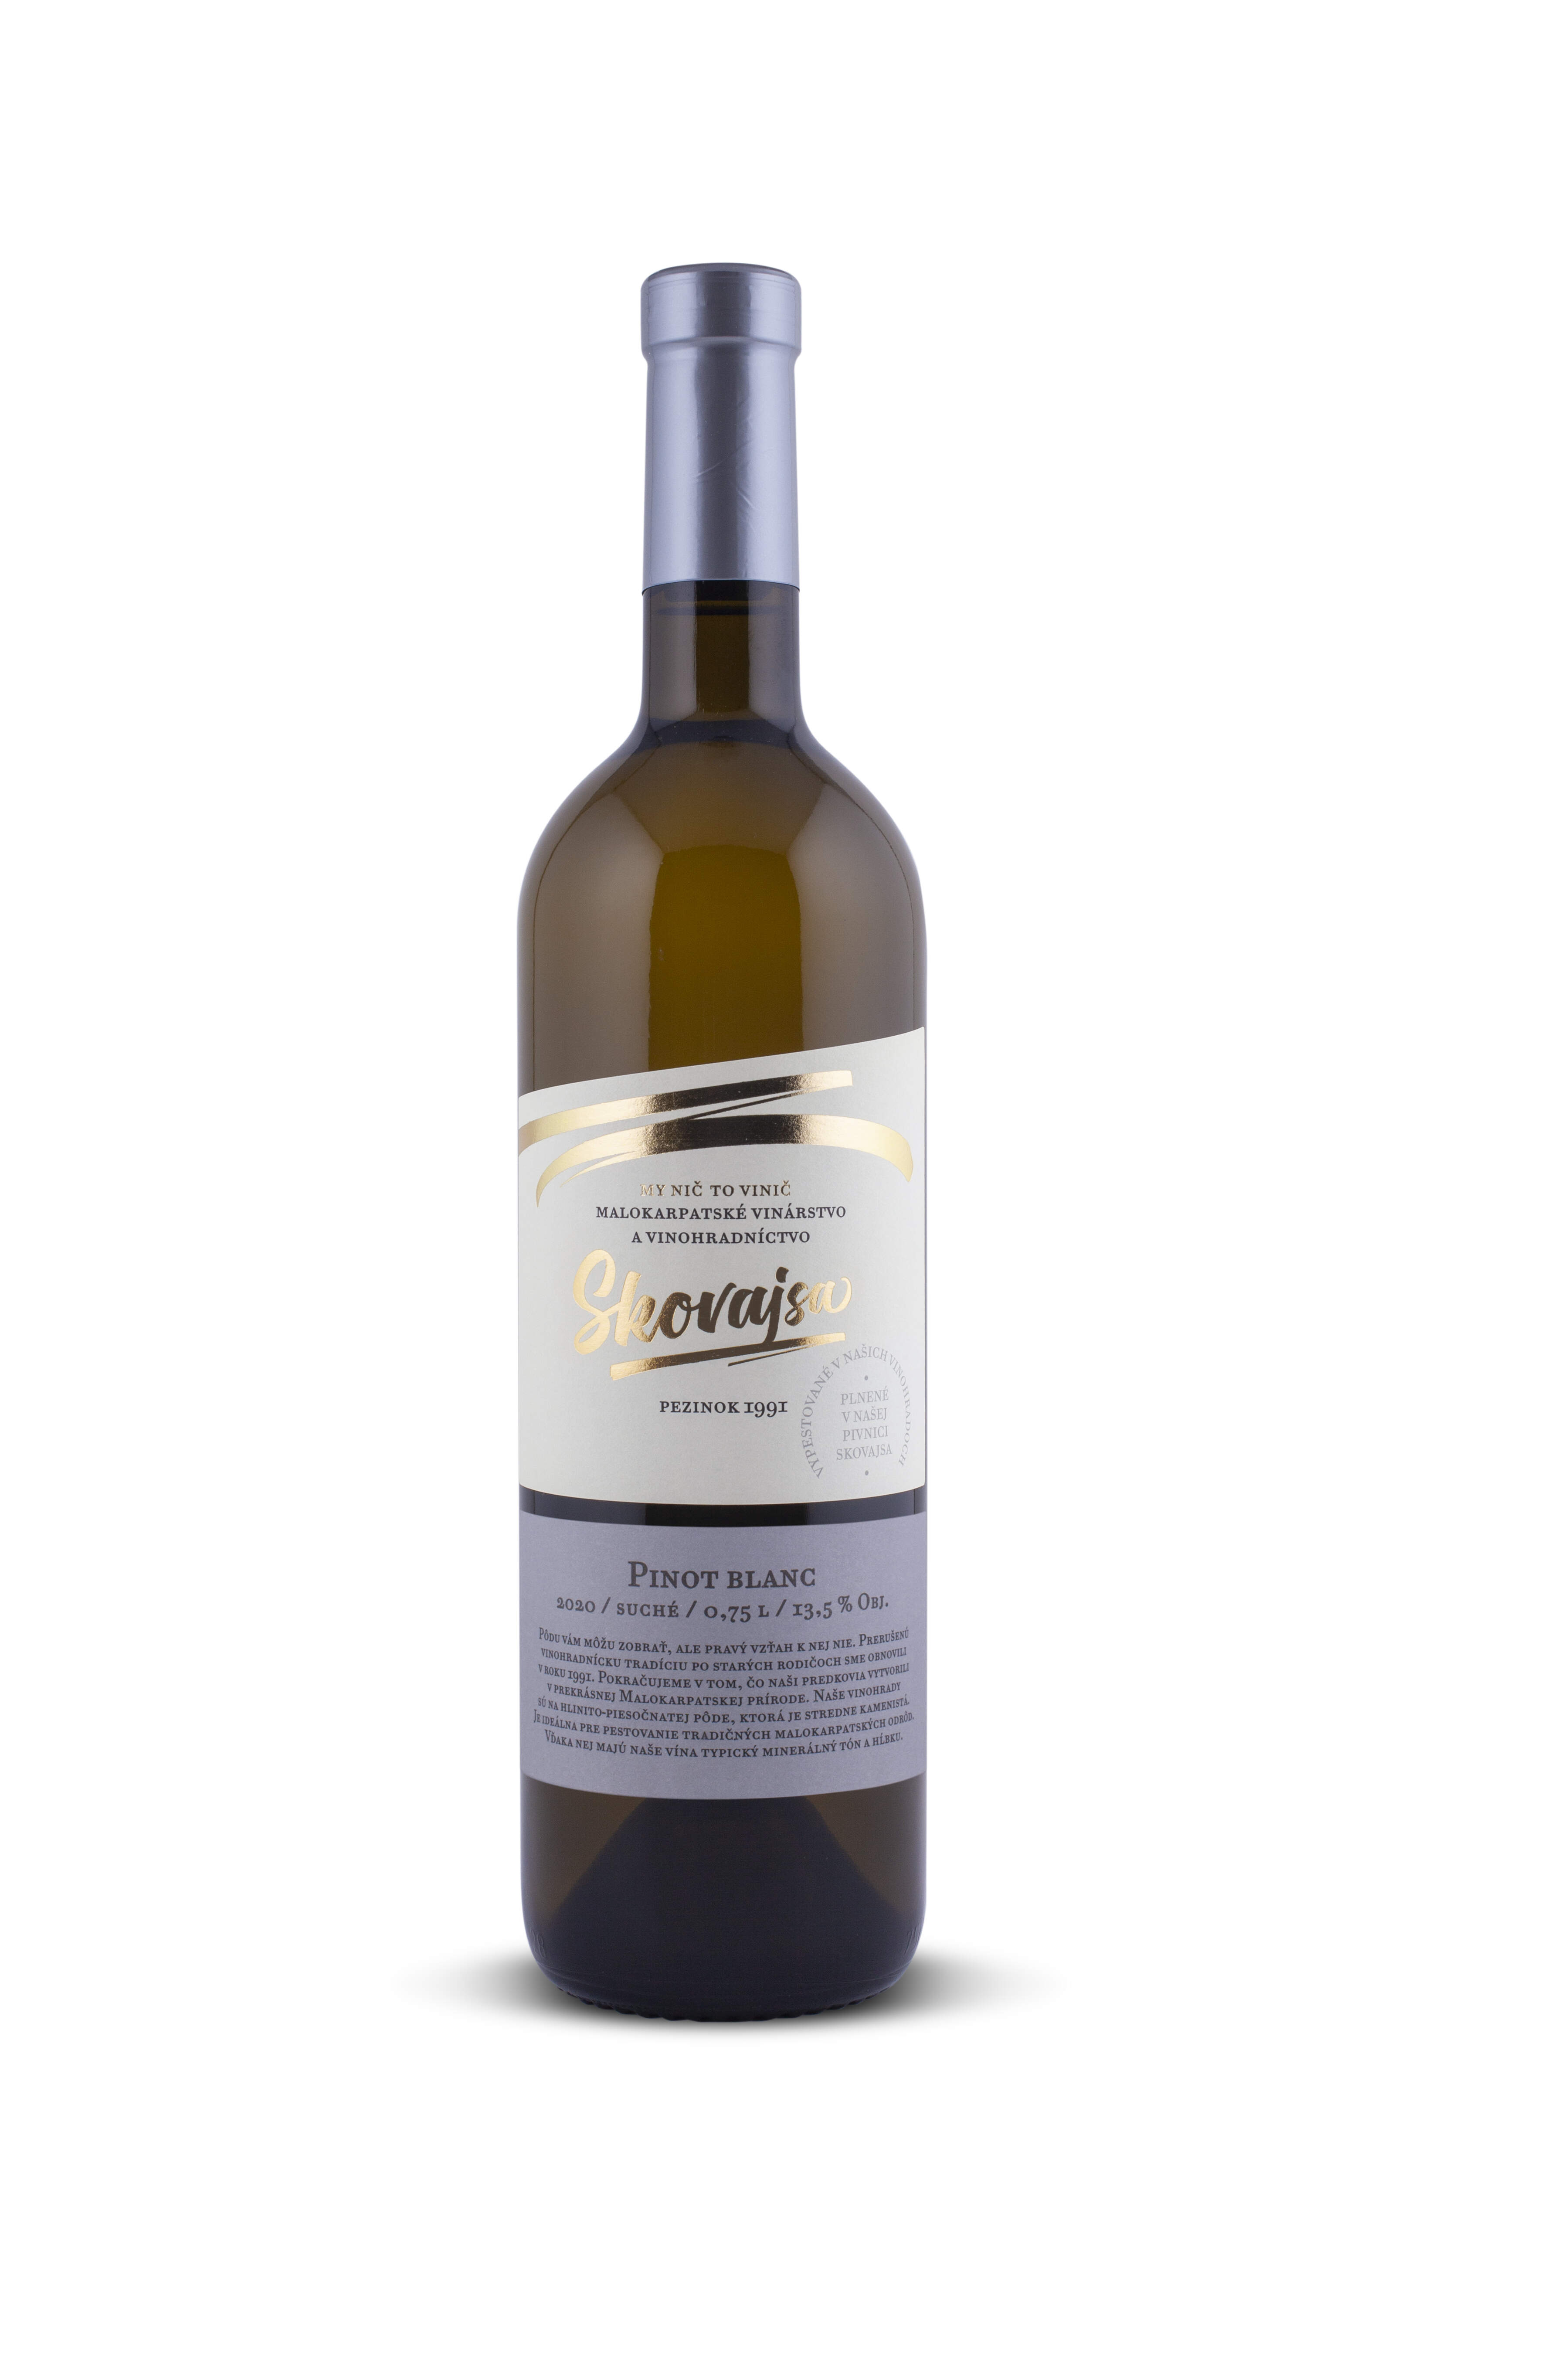 Pinot blanc z Pezinka, suché biele víno zo Slovenska.